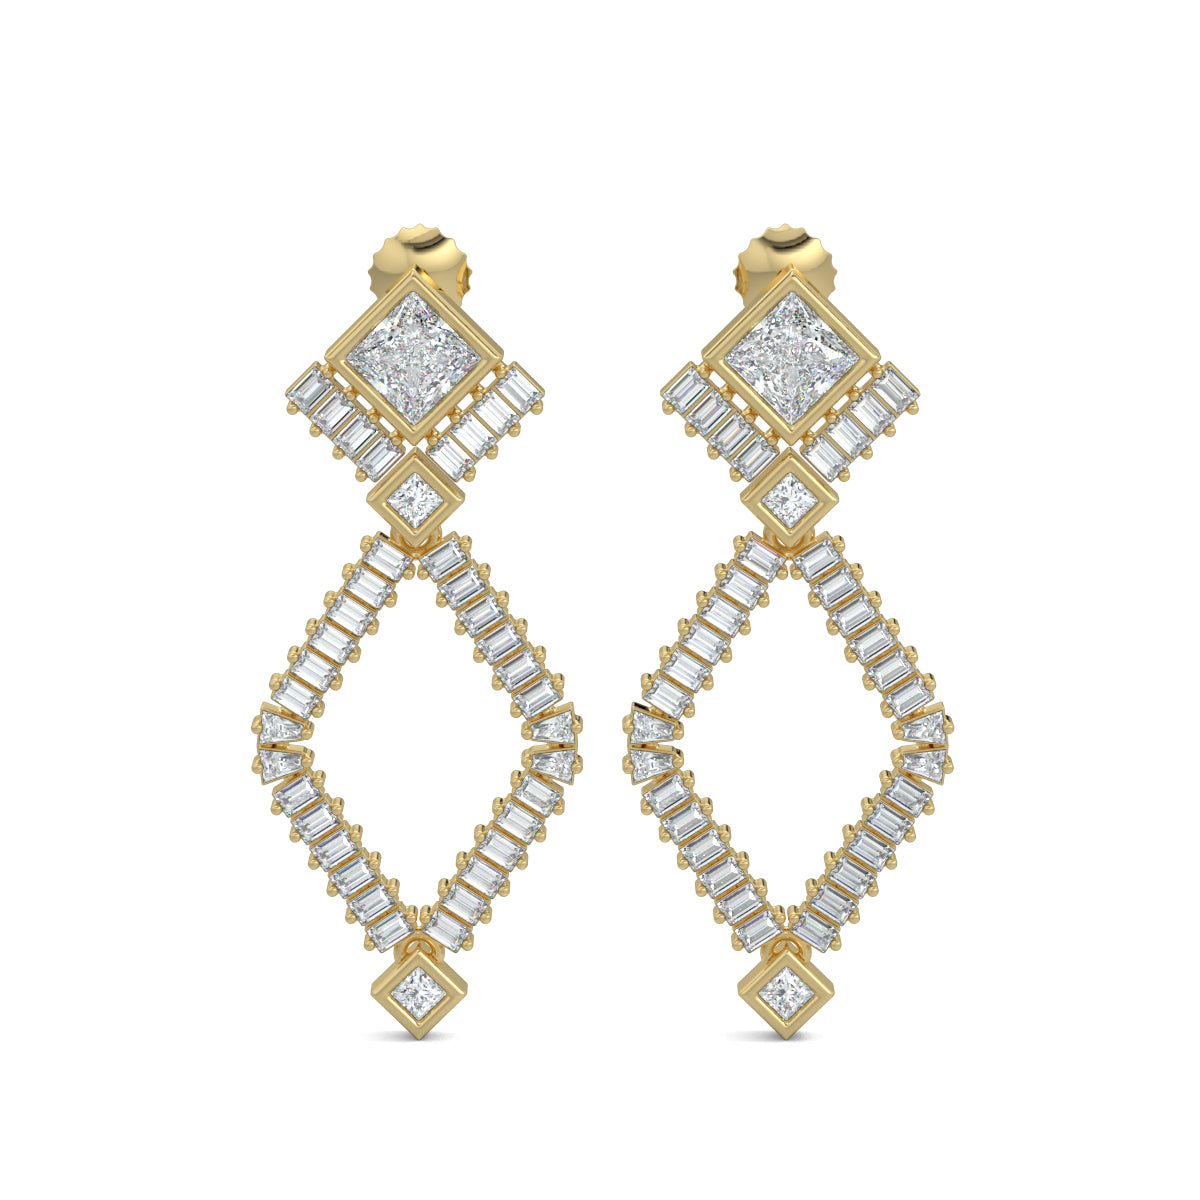 Yellow Gold, Diamond Earrings, Natural diamond earrings, Lab-grown diamond earrings, Crystal Dream Earrings, mid-length diamond earrings, princess cut diamond, baguette diamonds, elegant earrings, sophisticated jewelry